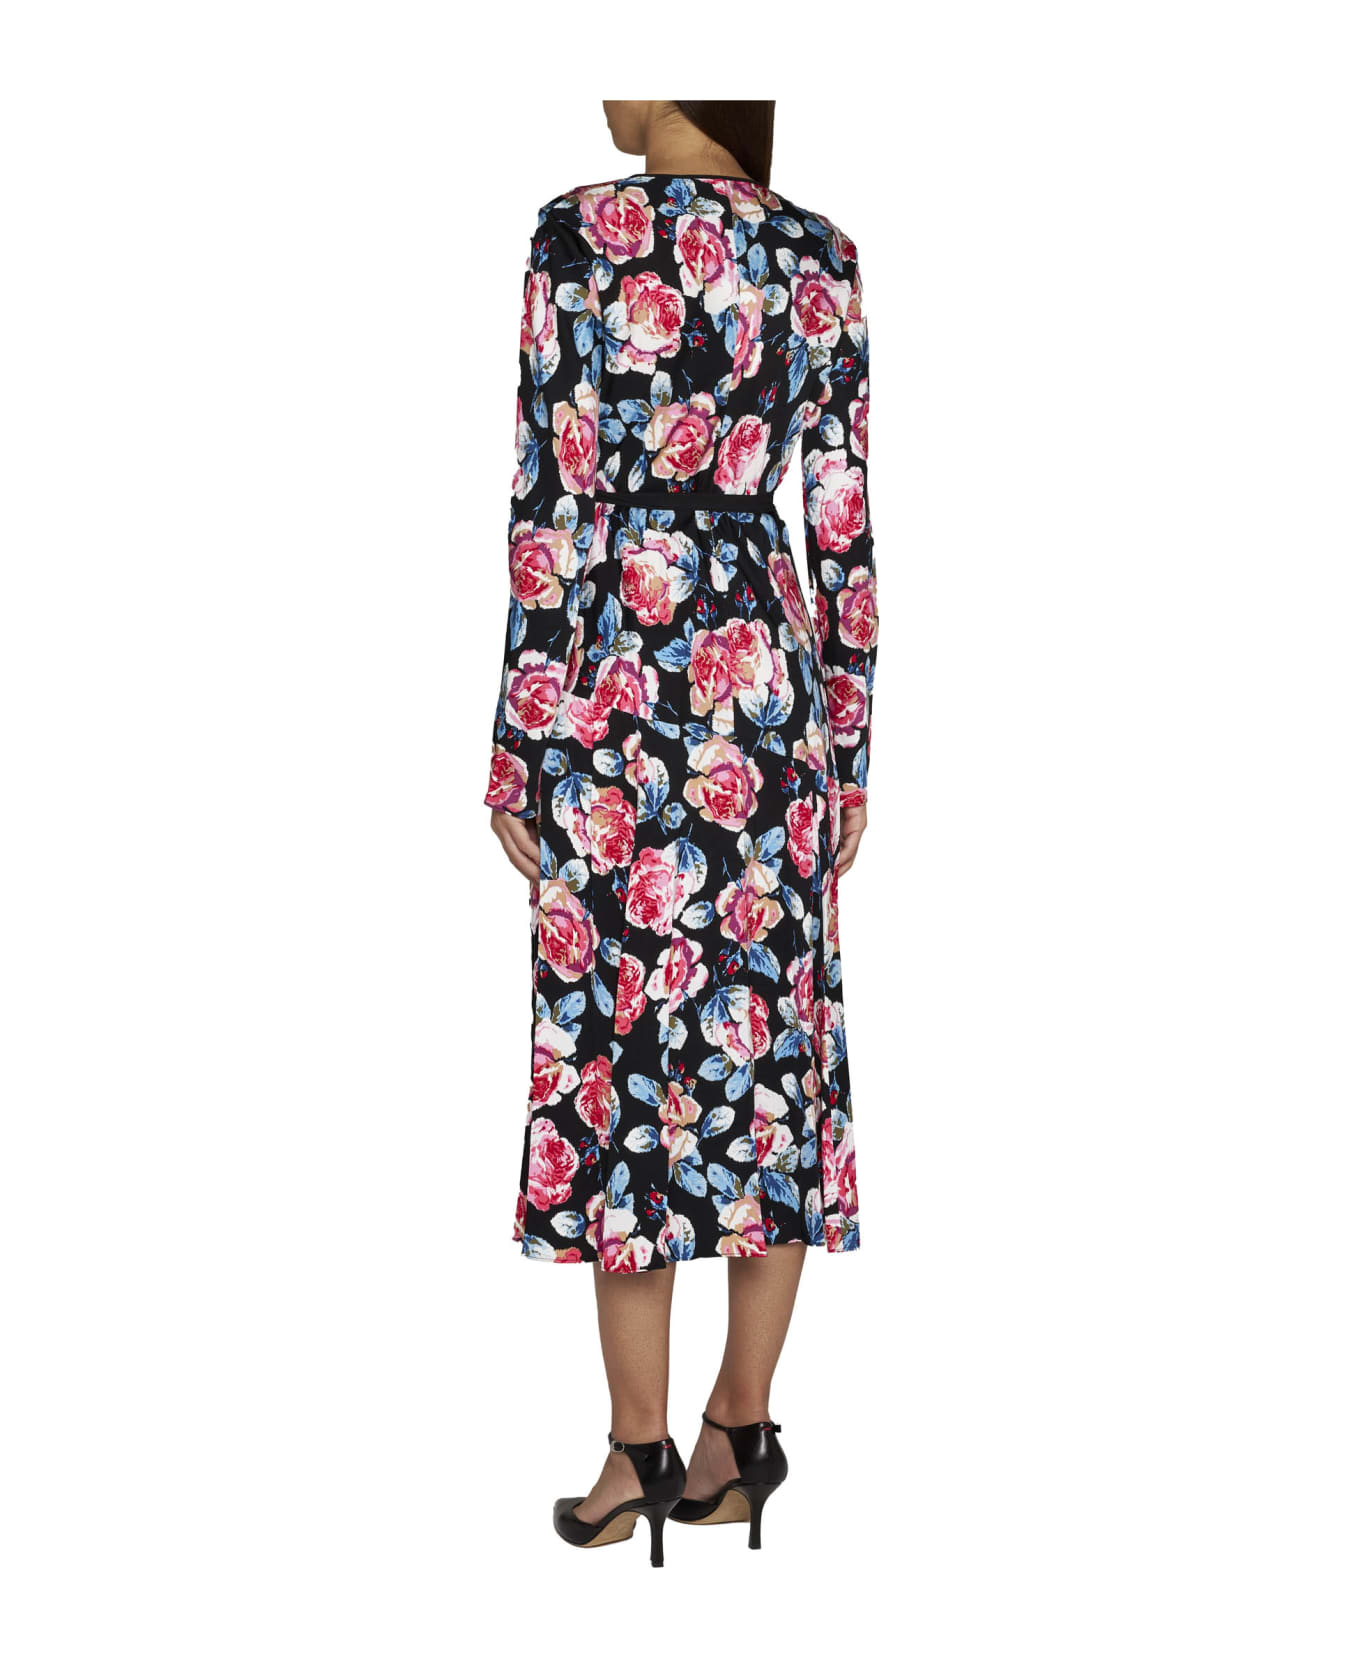 Diane Von Furstenberg Dress - Fortune rose med